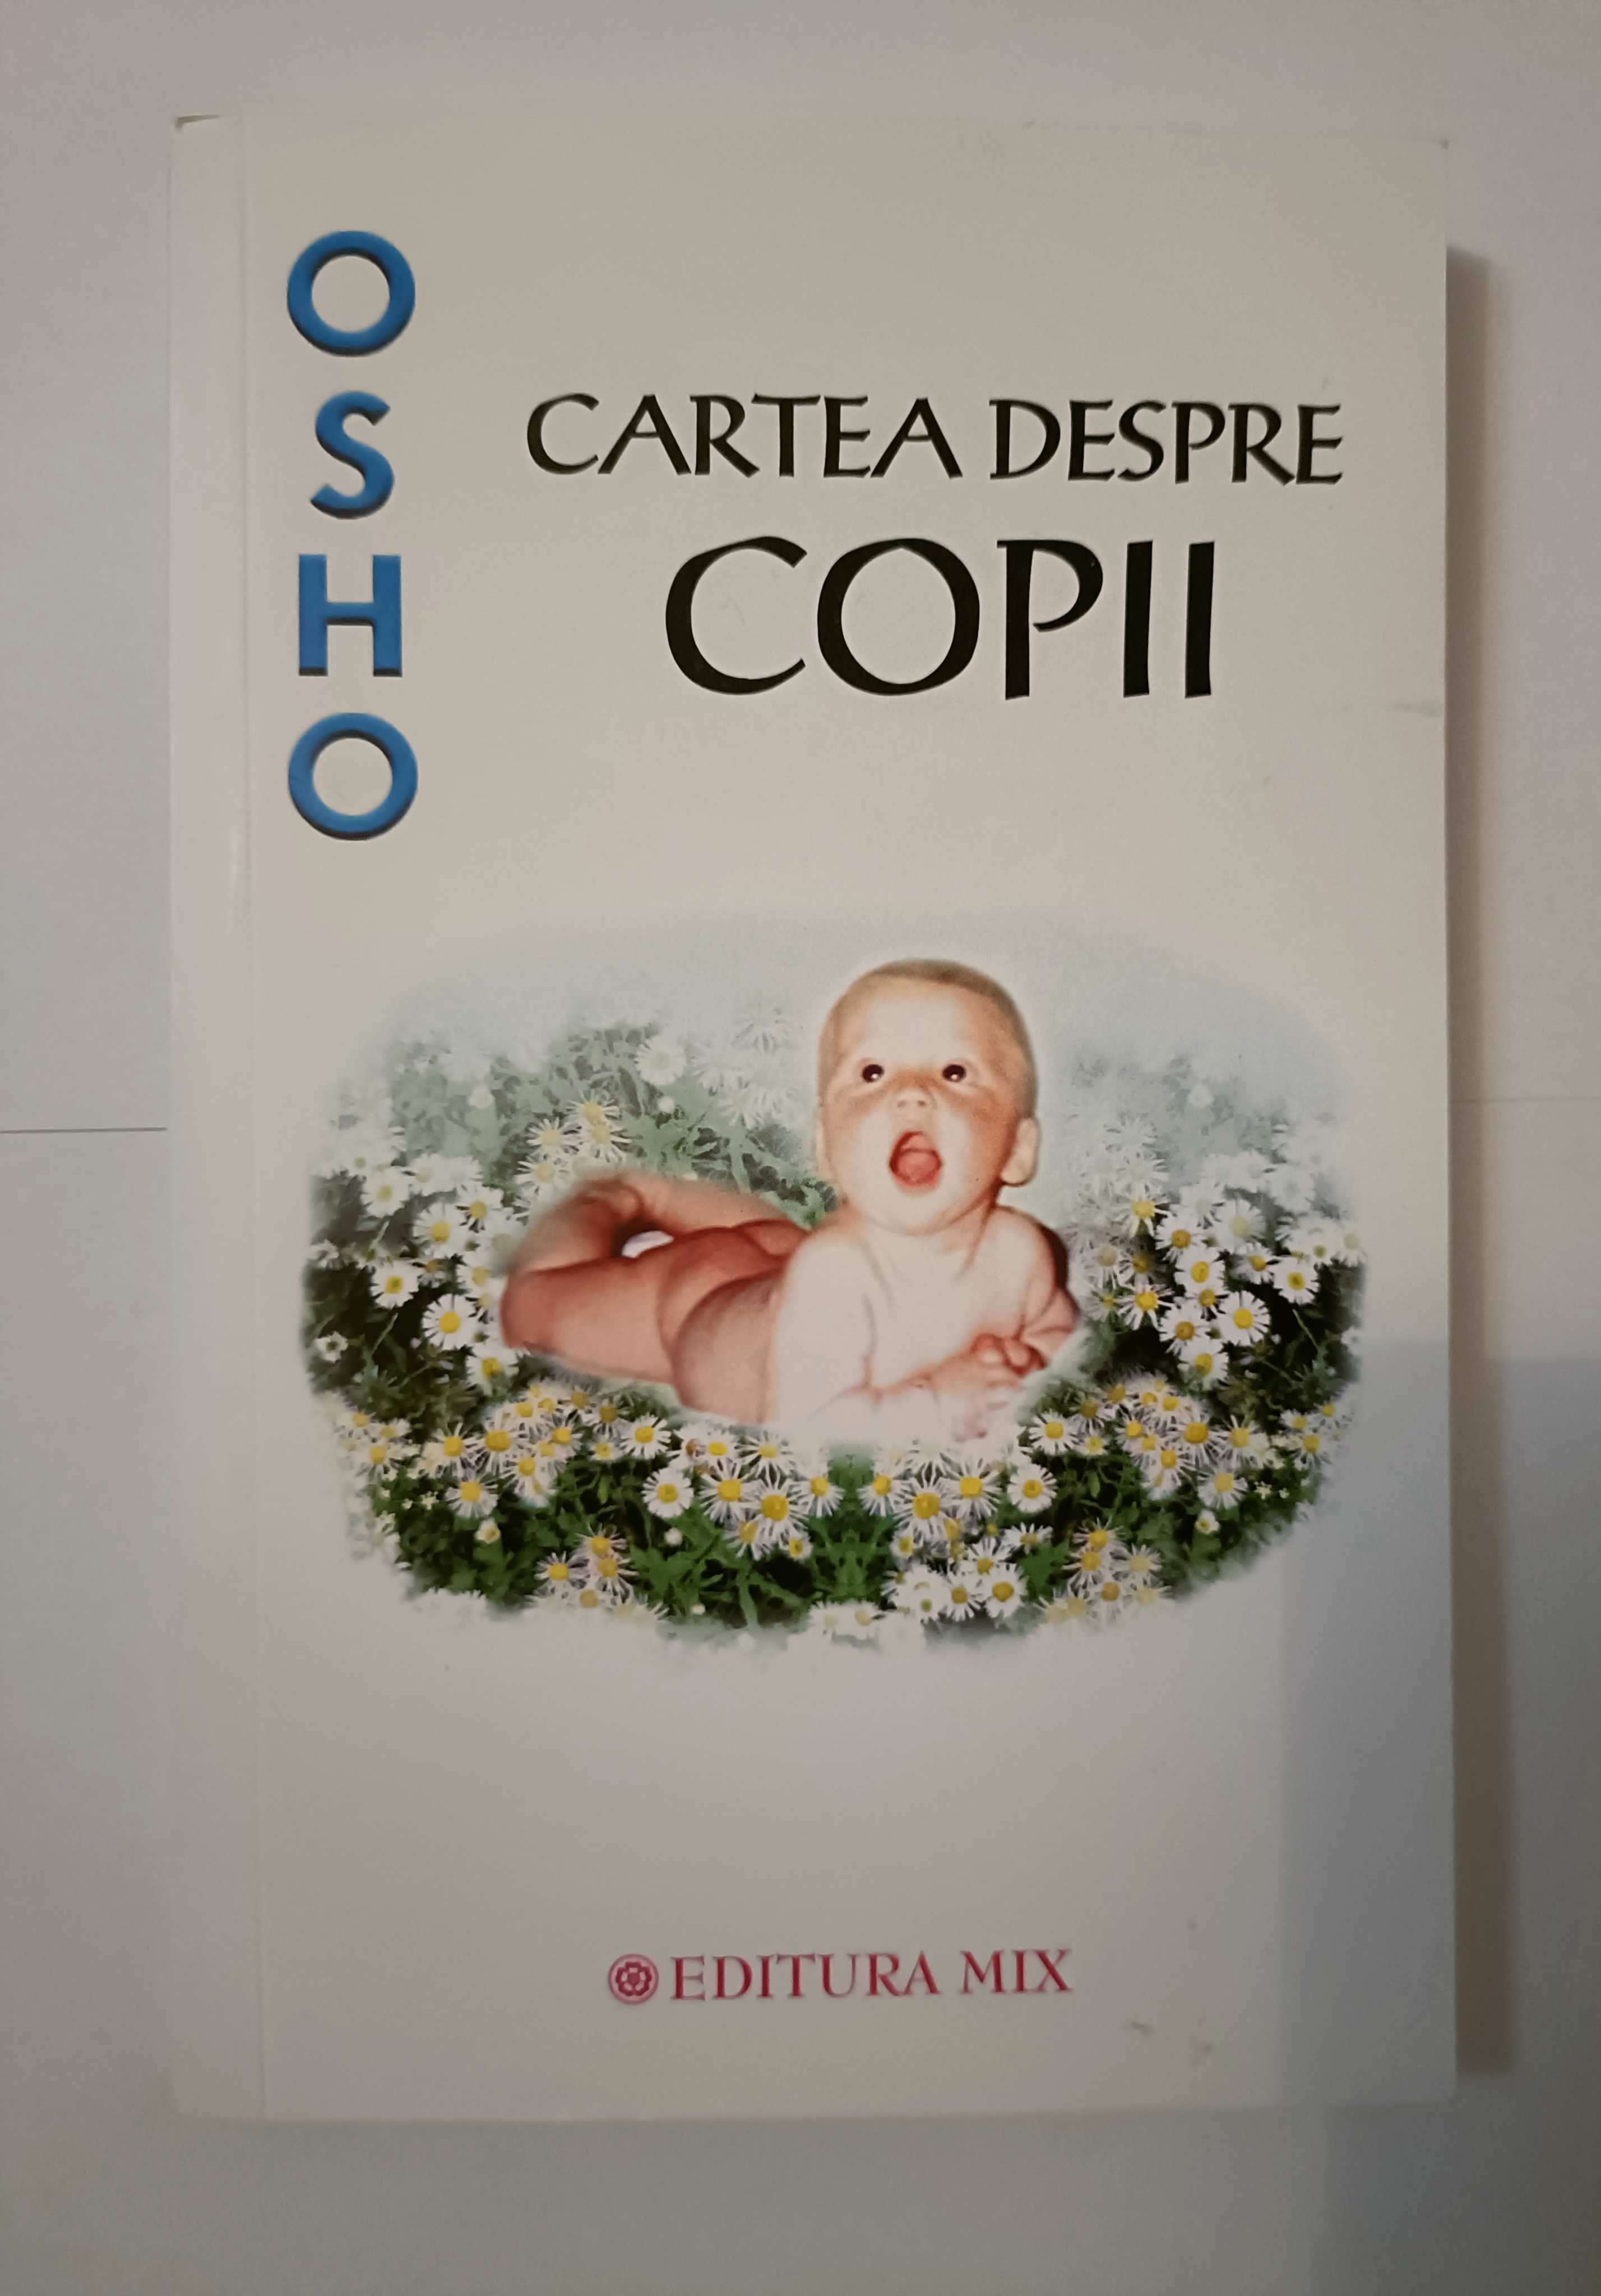 Cartea despre copii | OSHO